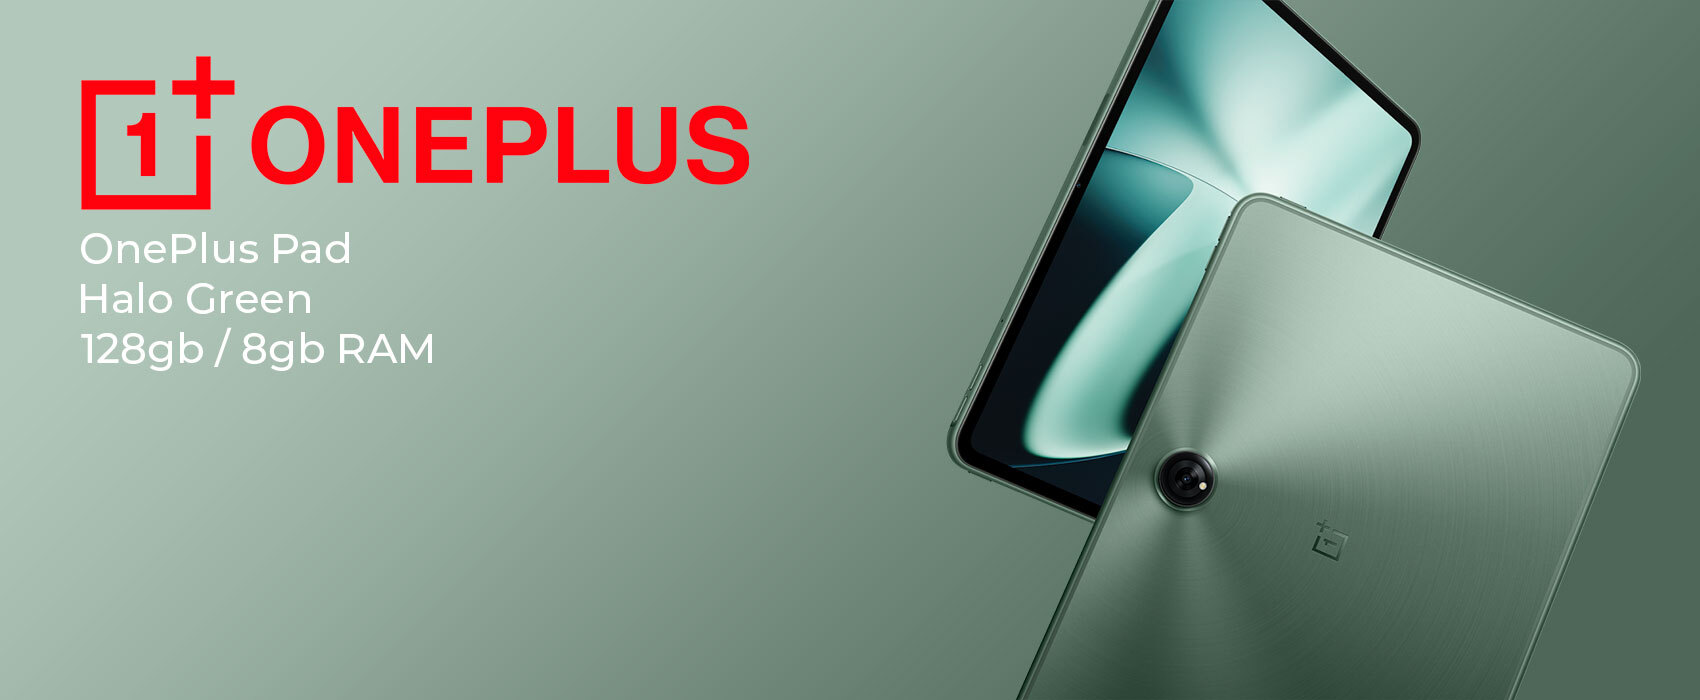 OnePlus Pad 128GB/8GB Halo Green - Fremtiden for tablets begynder her